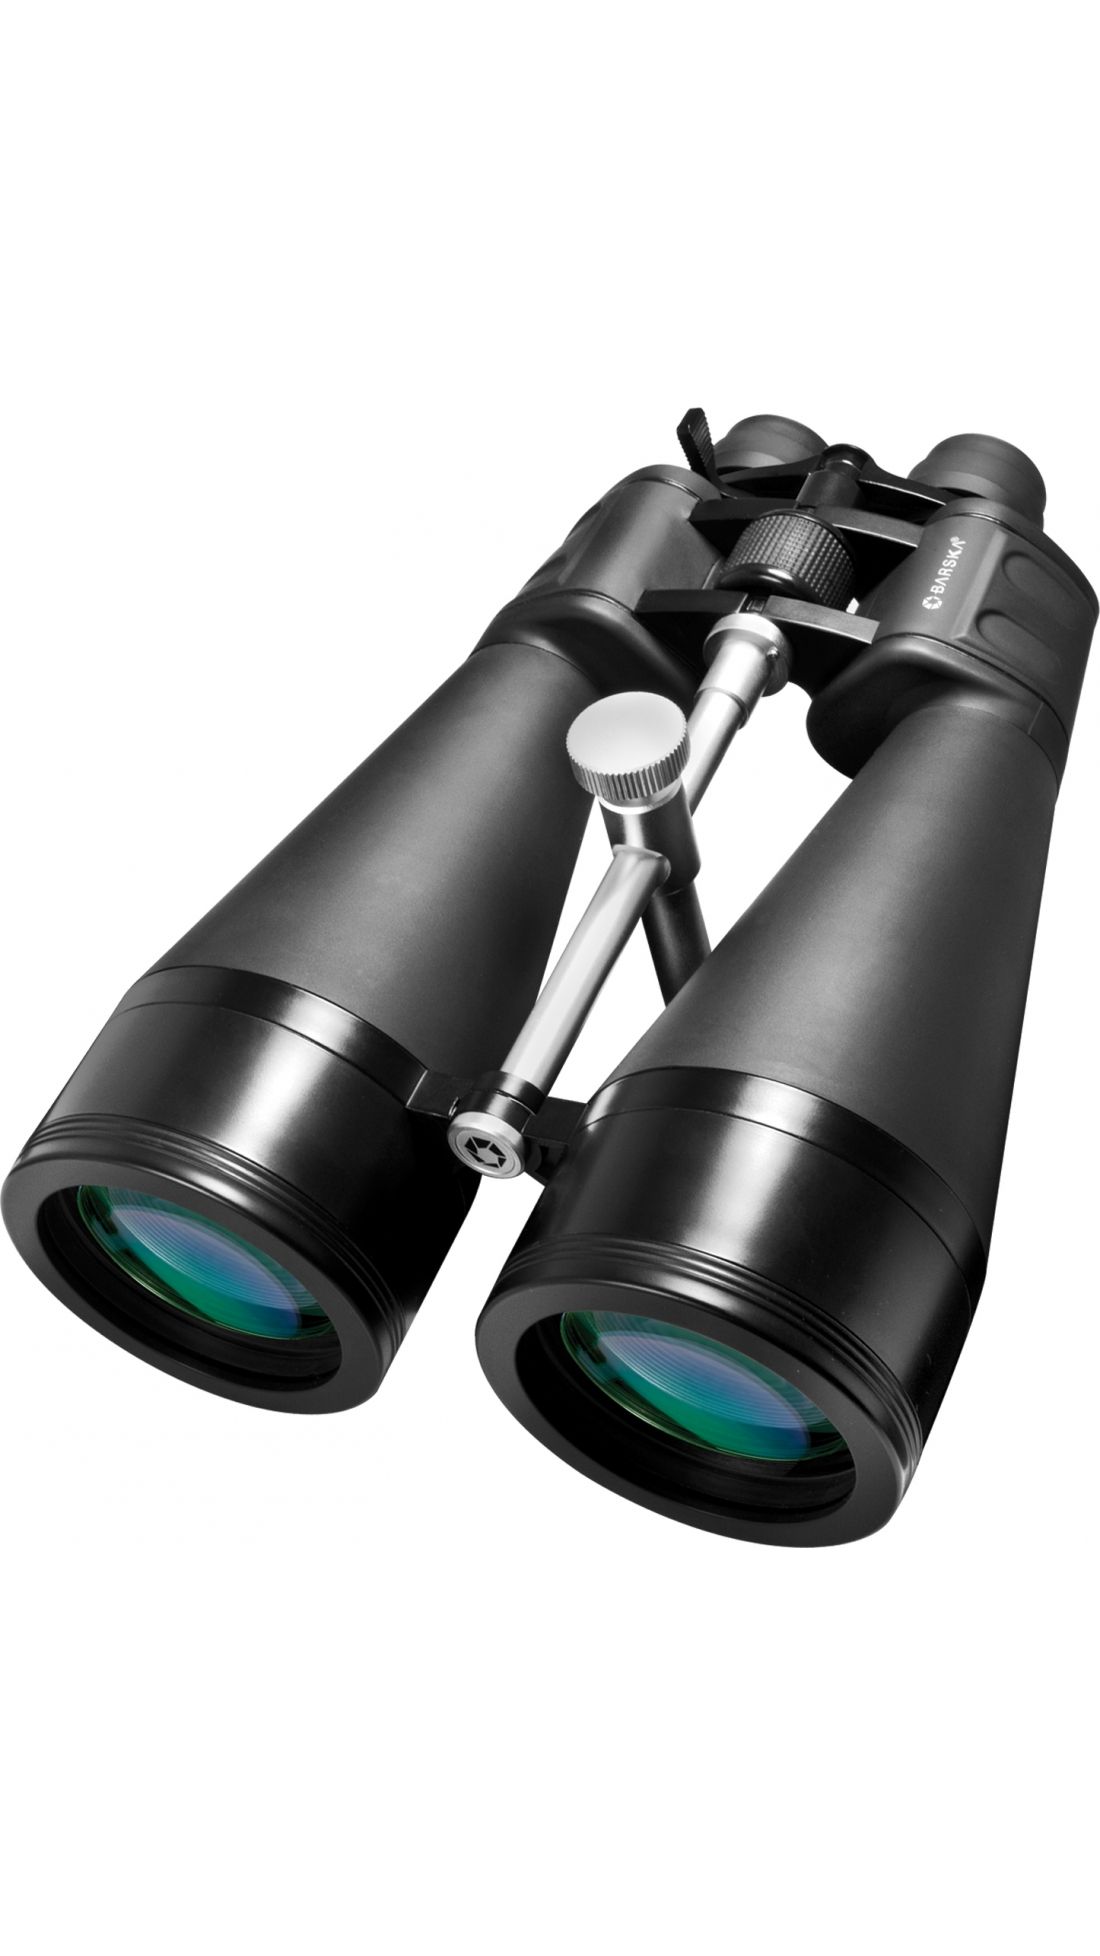 Barska Gladiator 25-125x80mm Porro Prism Zoom Binoculars 53% Off | AB10594